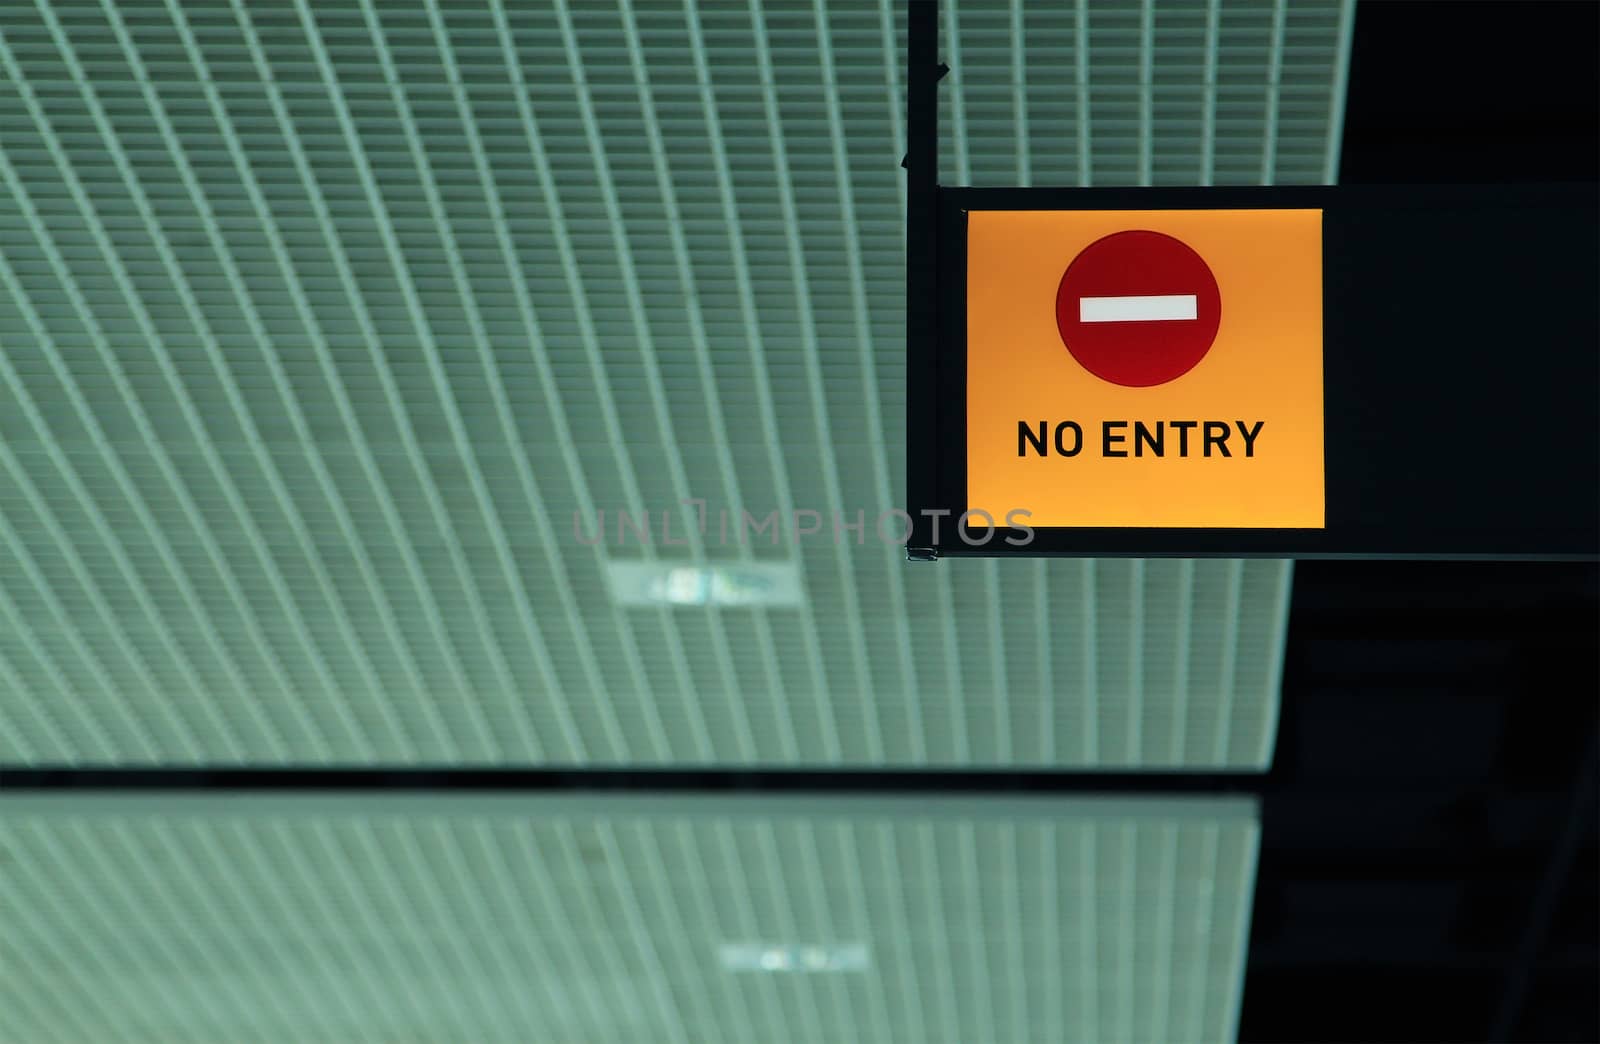 No entry sign at an airport